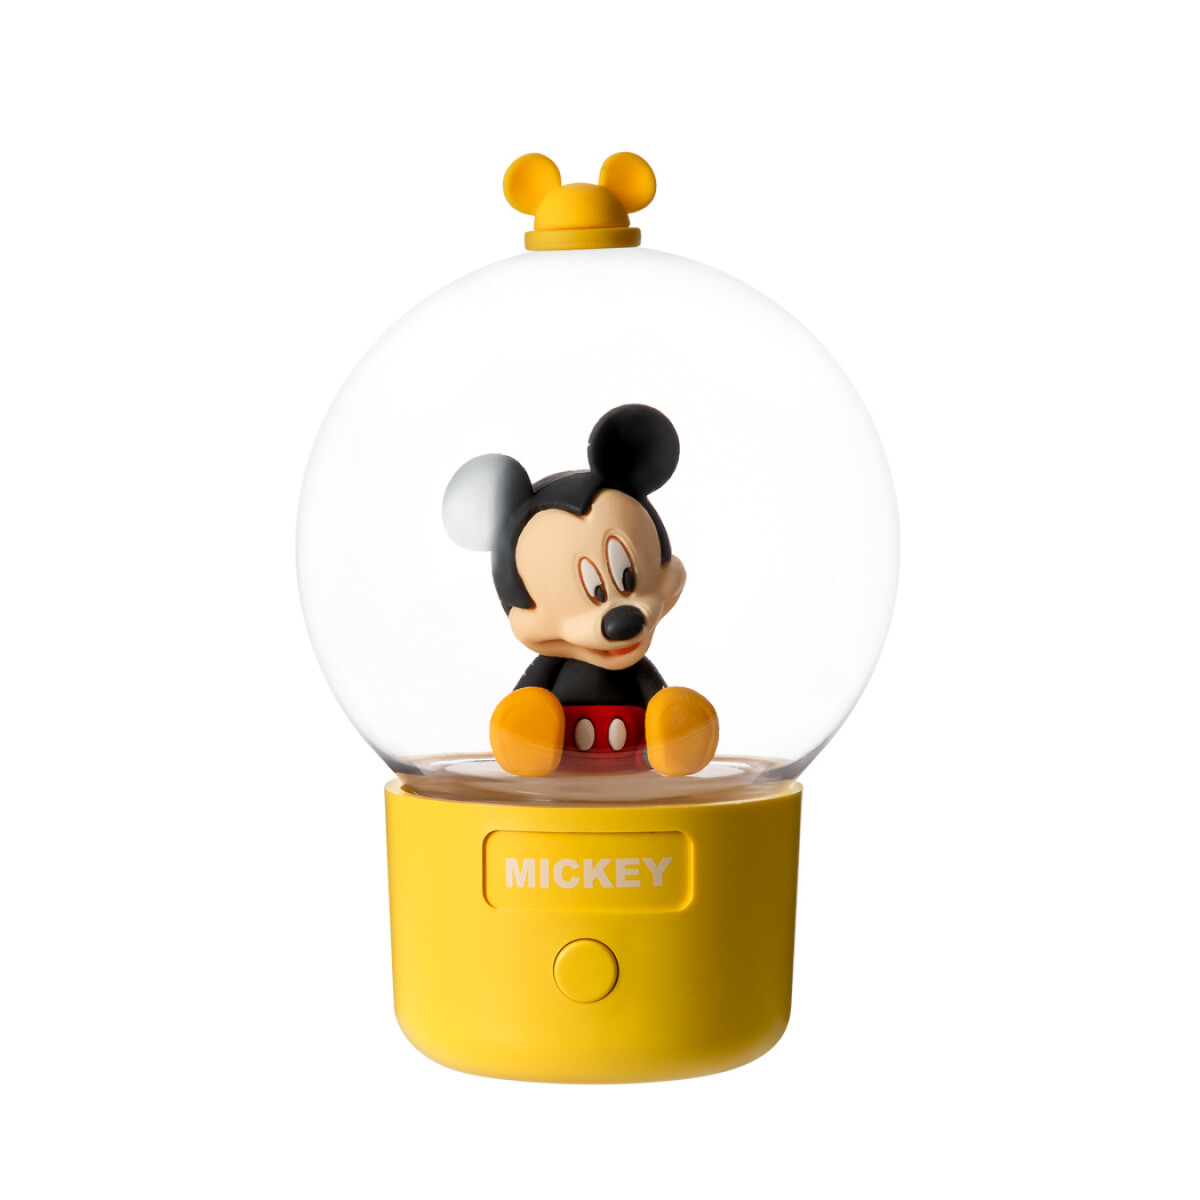 Veladora esfera Disney - Mickey 